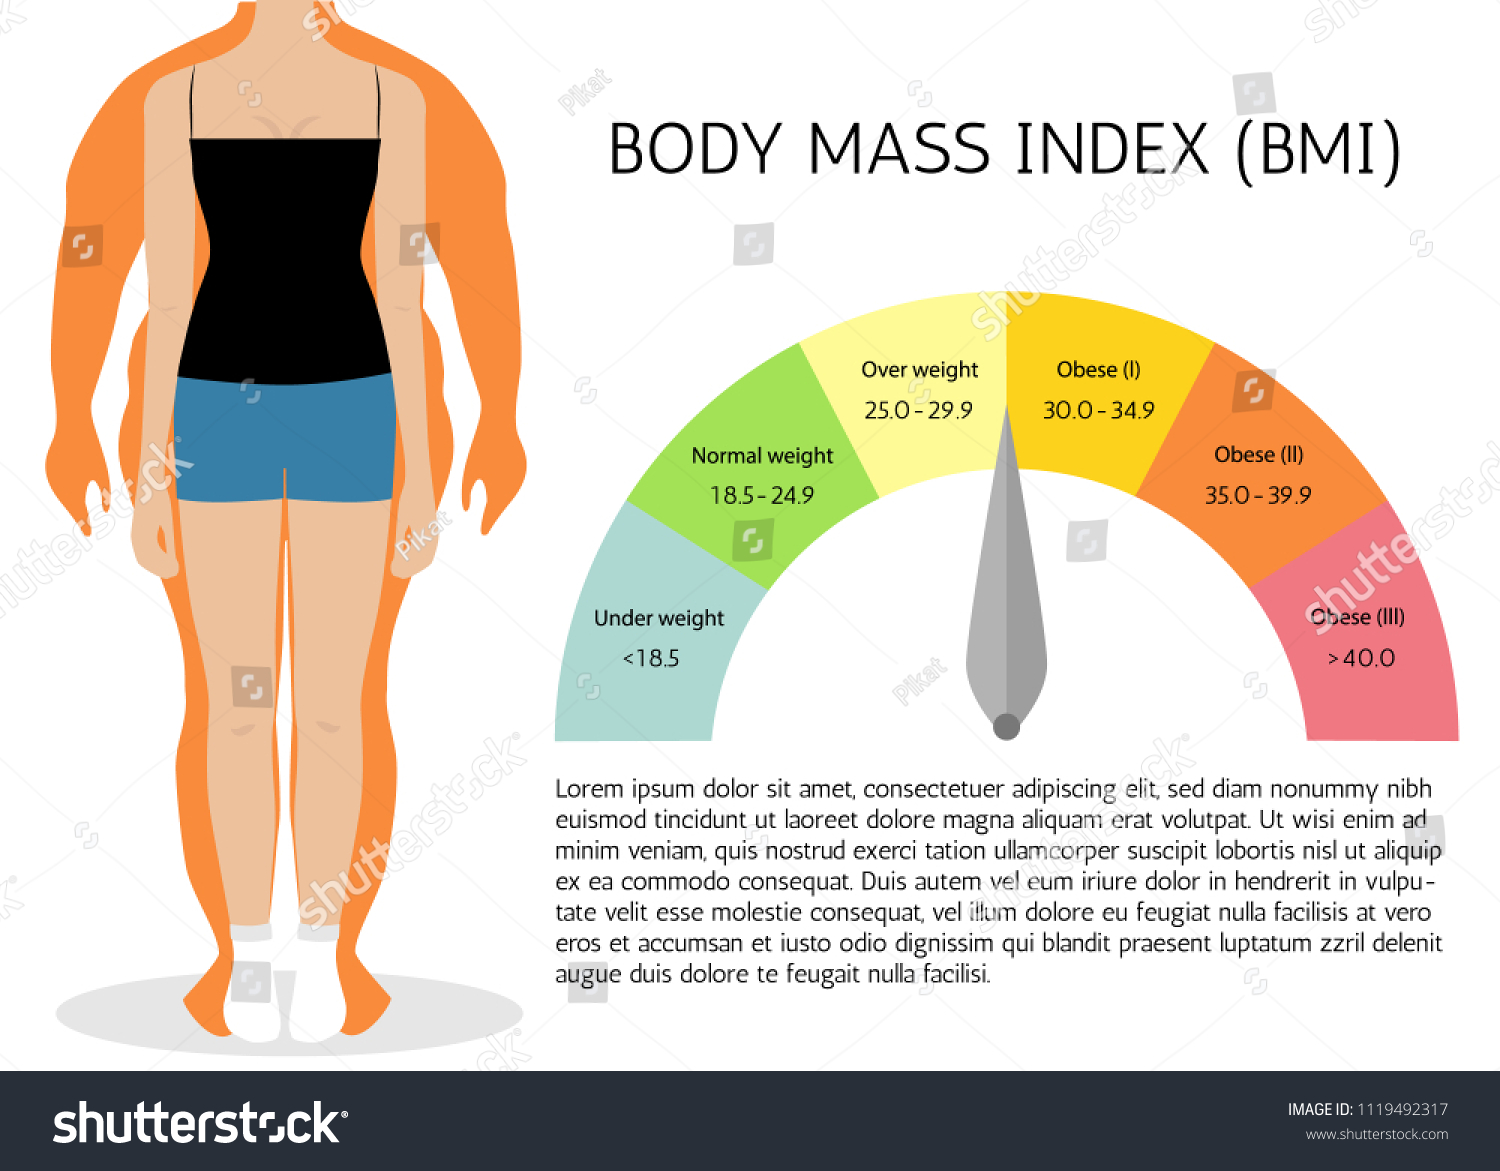 Bmi Body Mass Index Infographic Chartvector Stockvector Rechtenvrij 1119492317 Shutterstock 0162